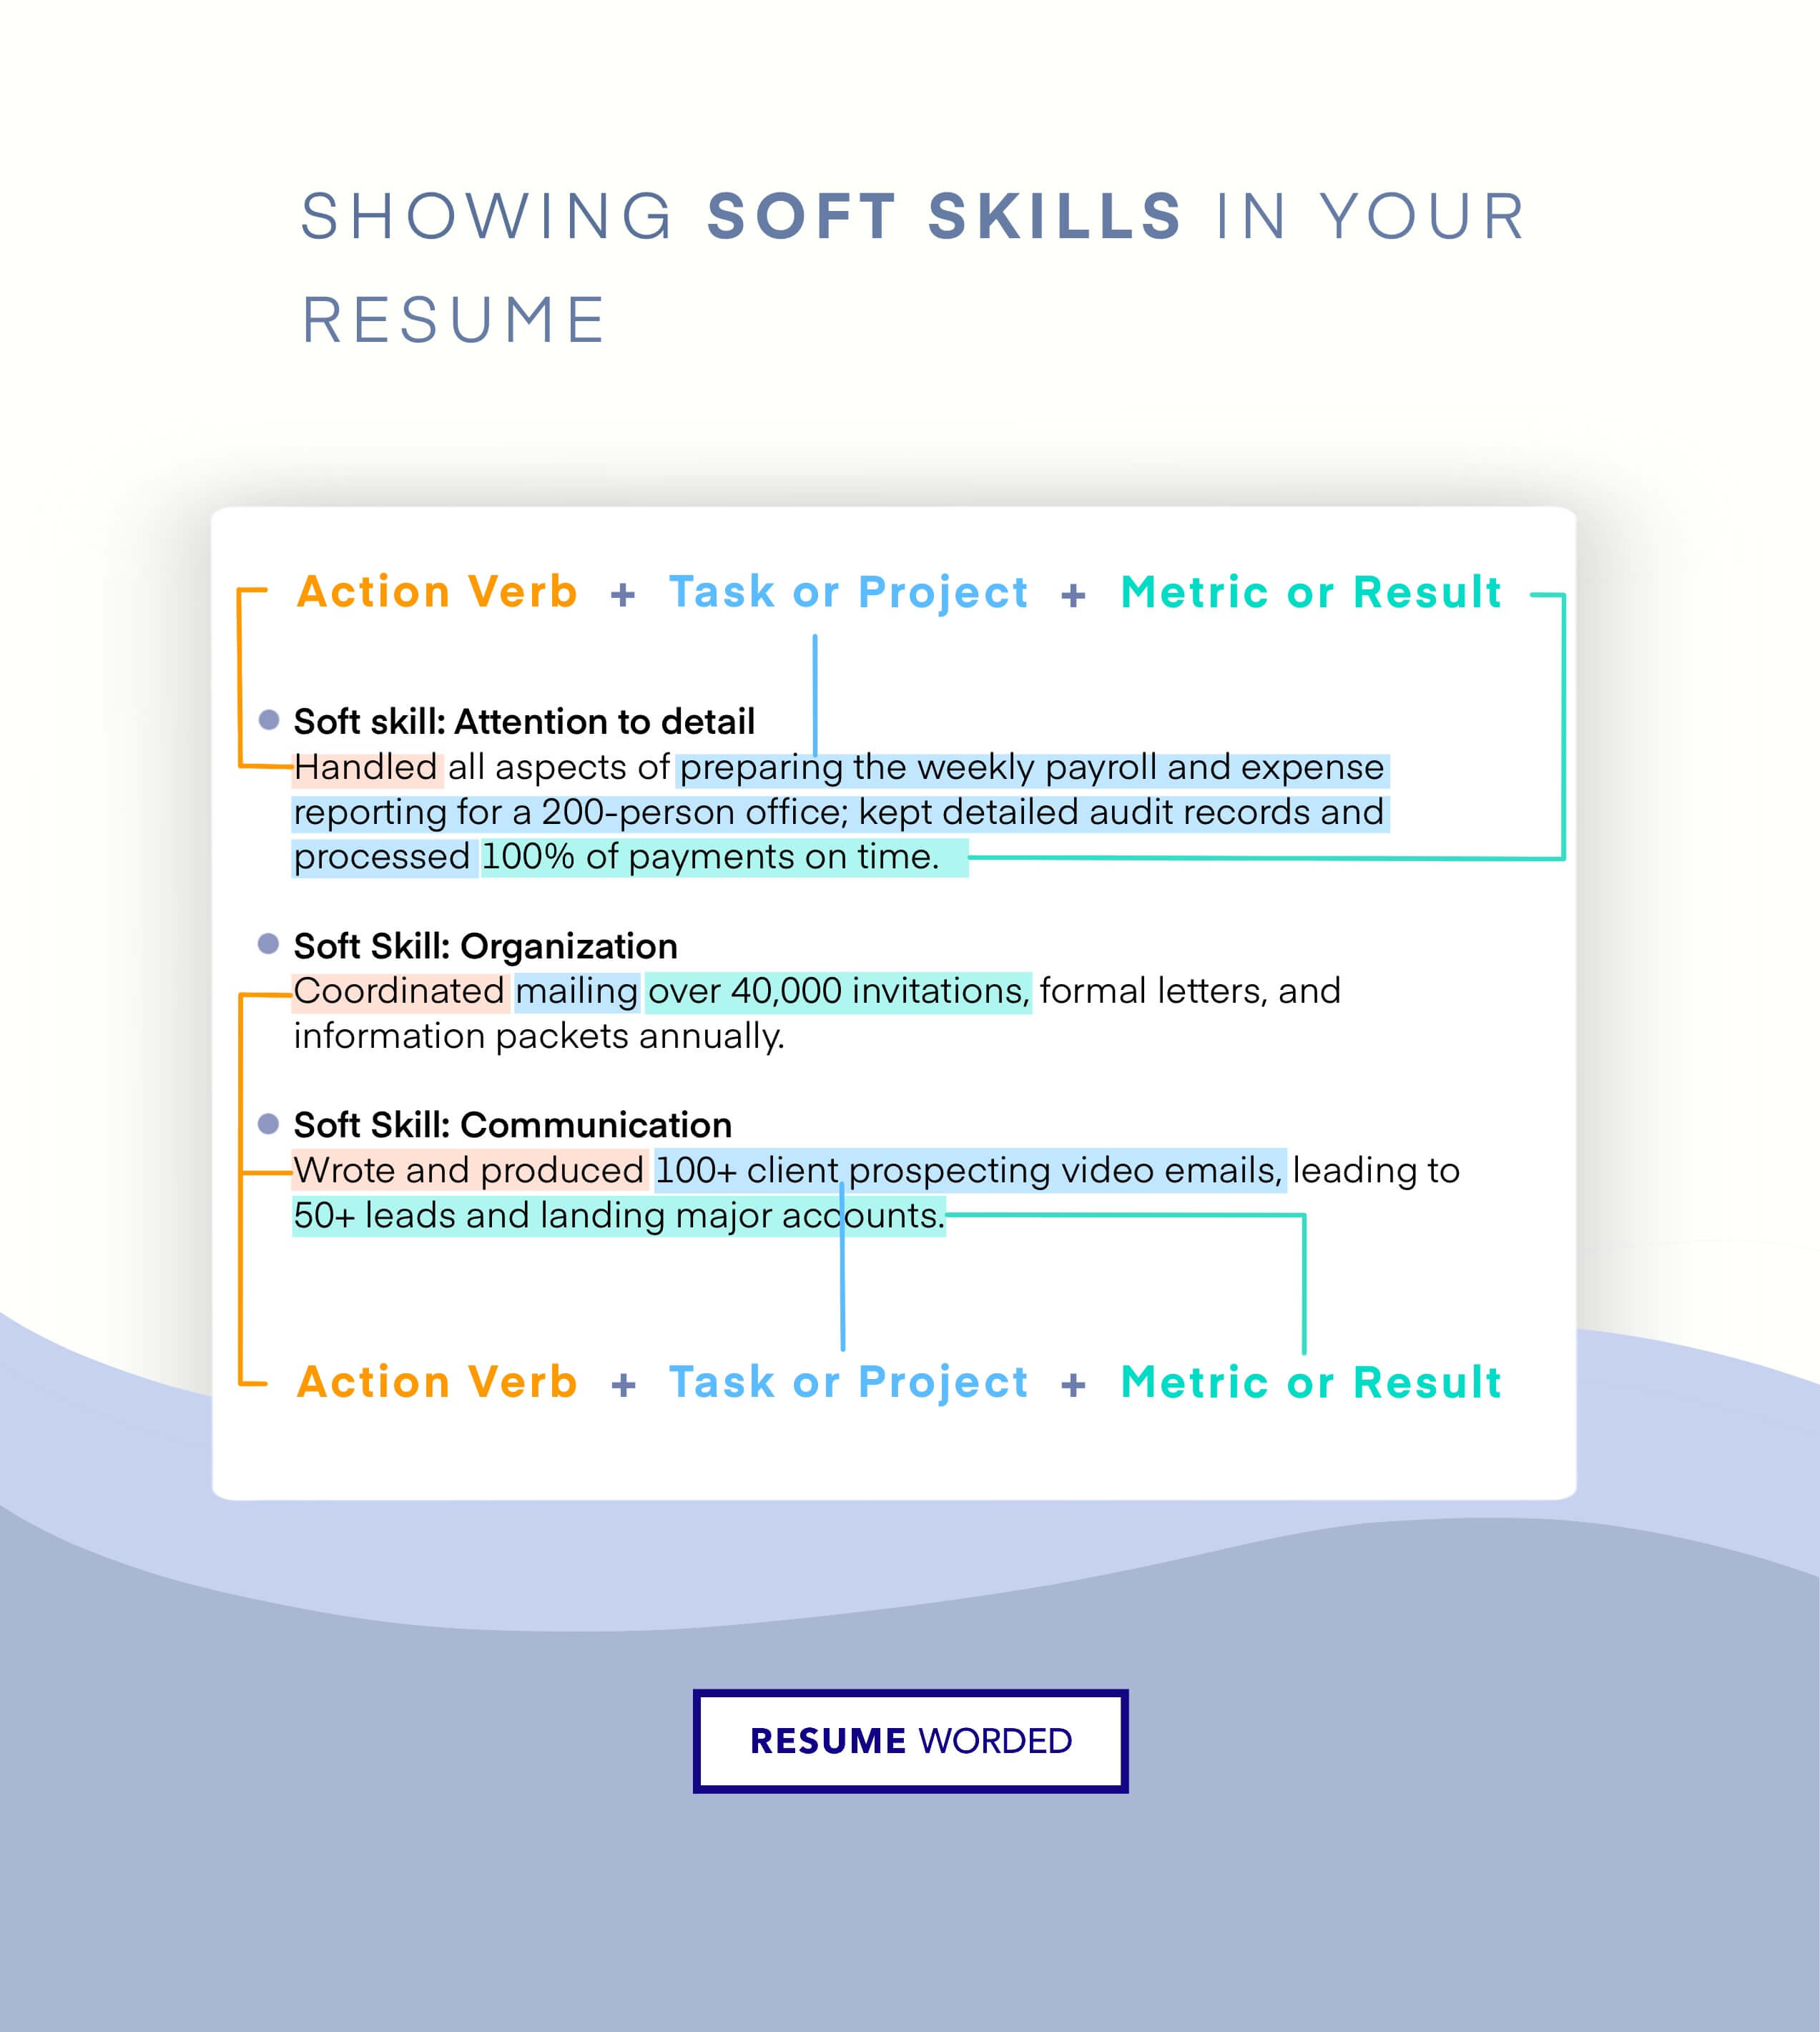 Emphasize your soft skills - Production Assistant CV